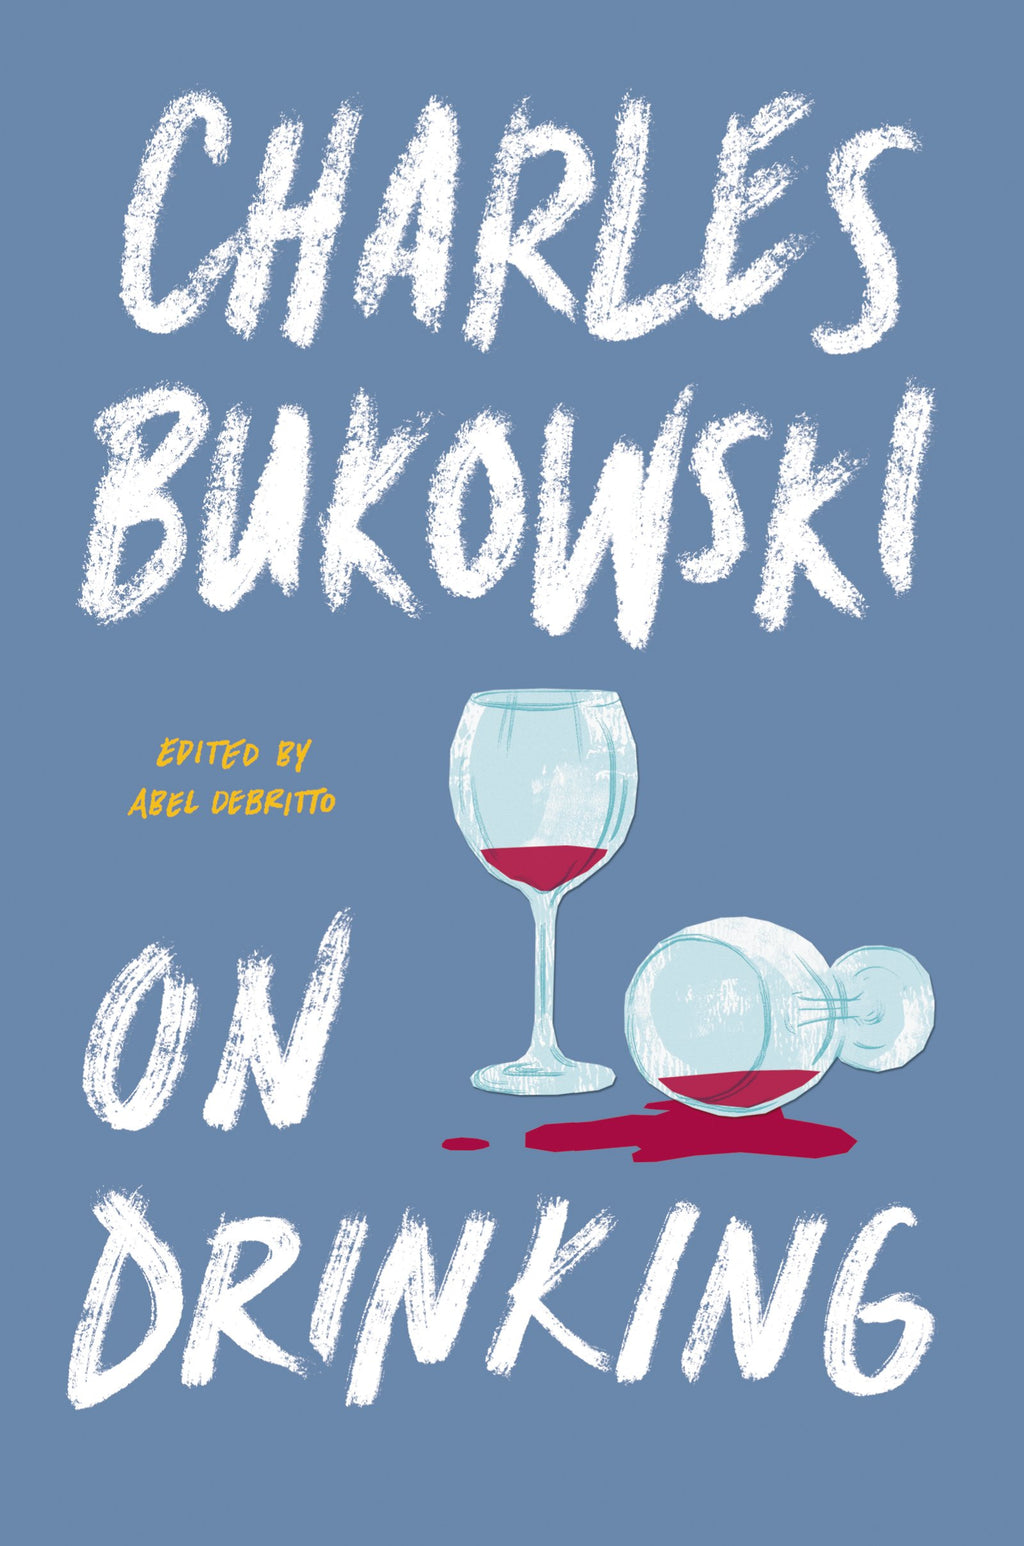 On Drinking by Charles Bukowski